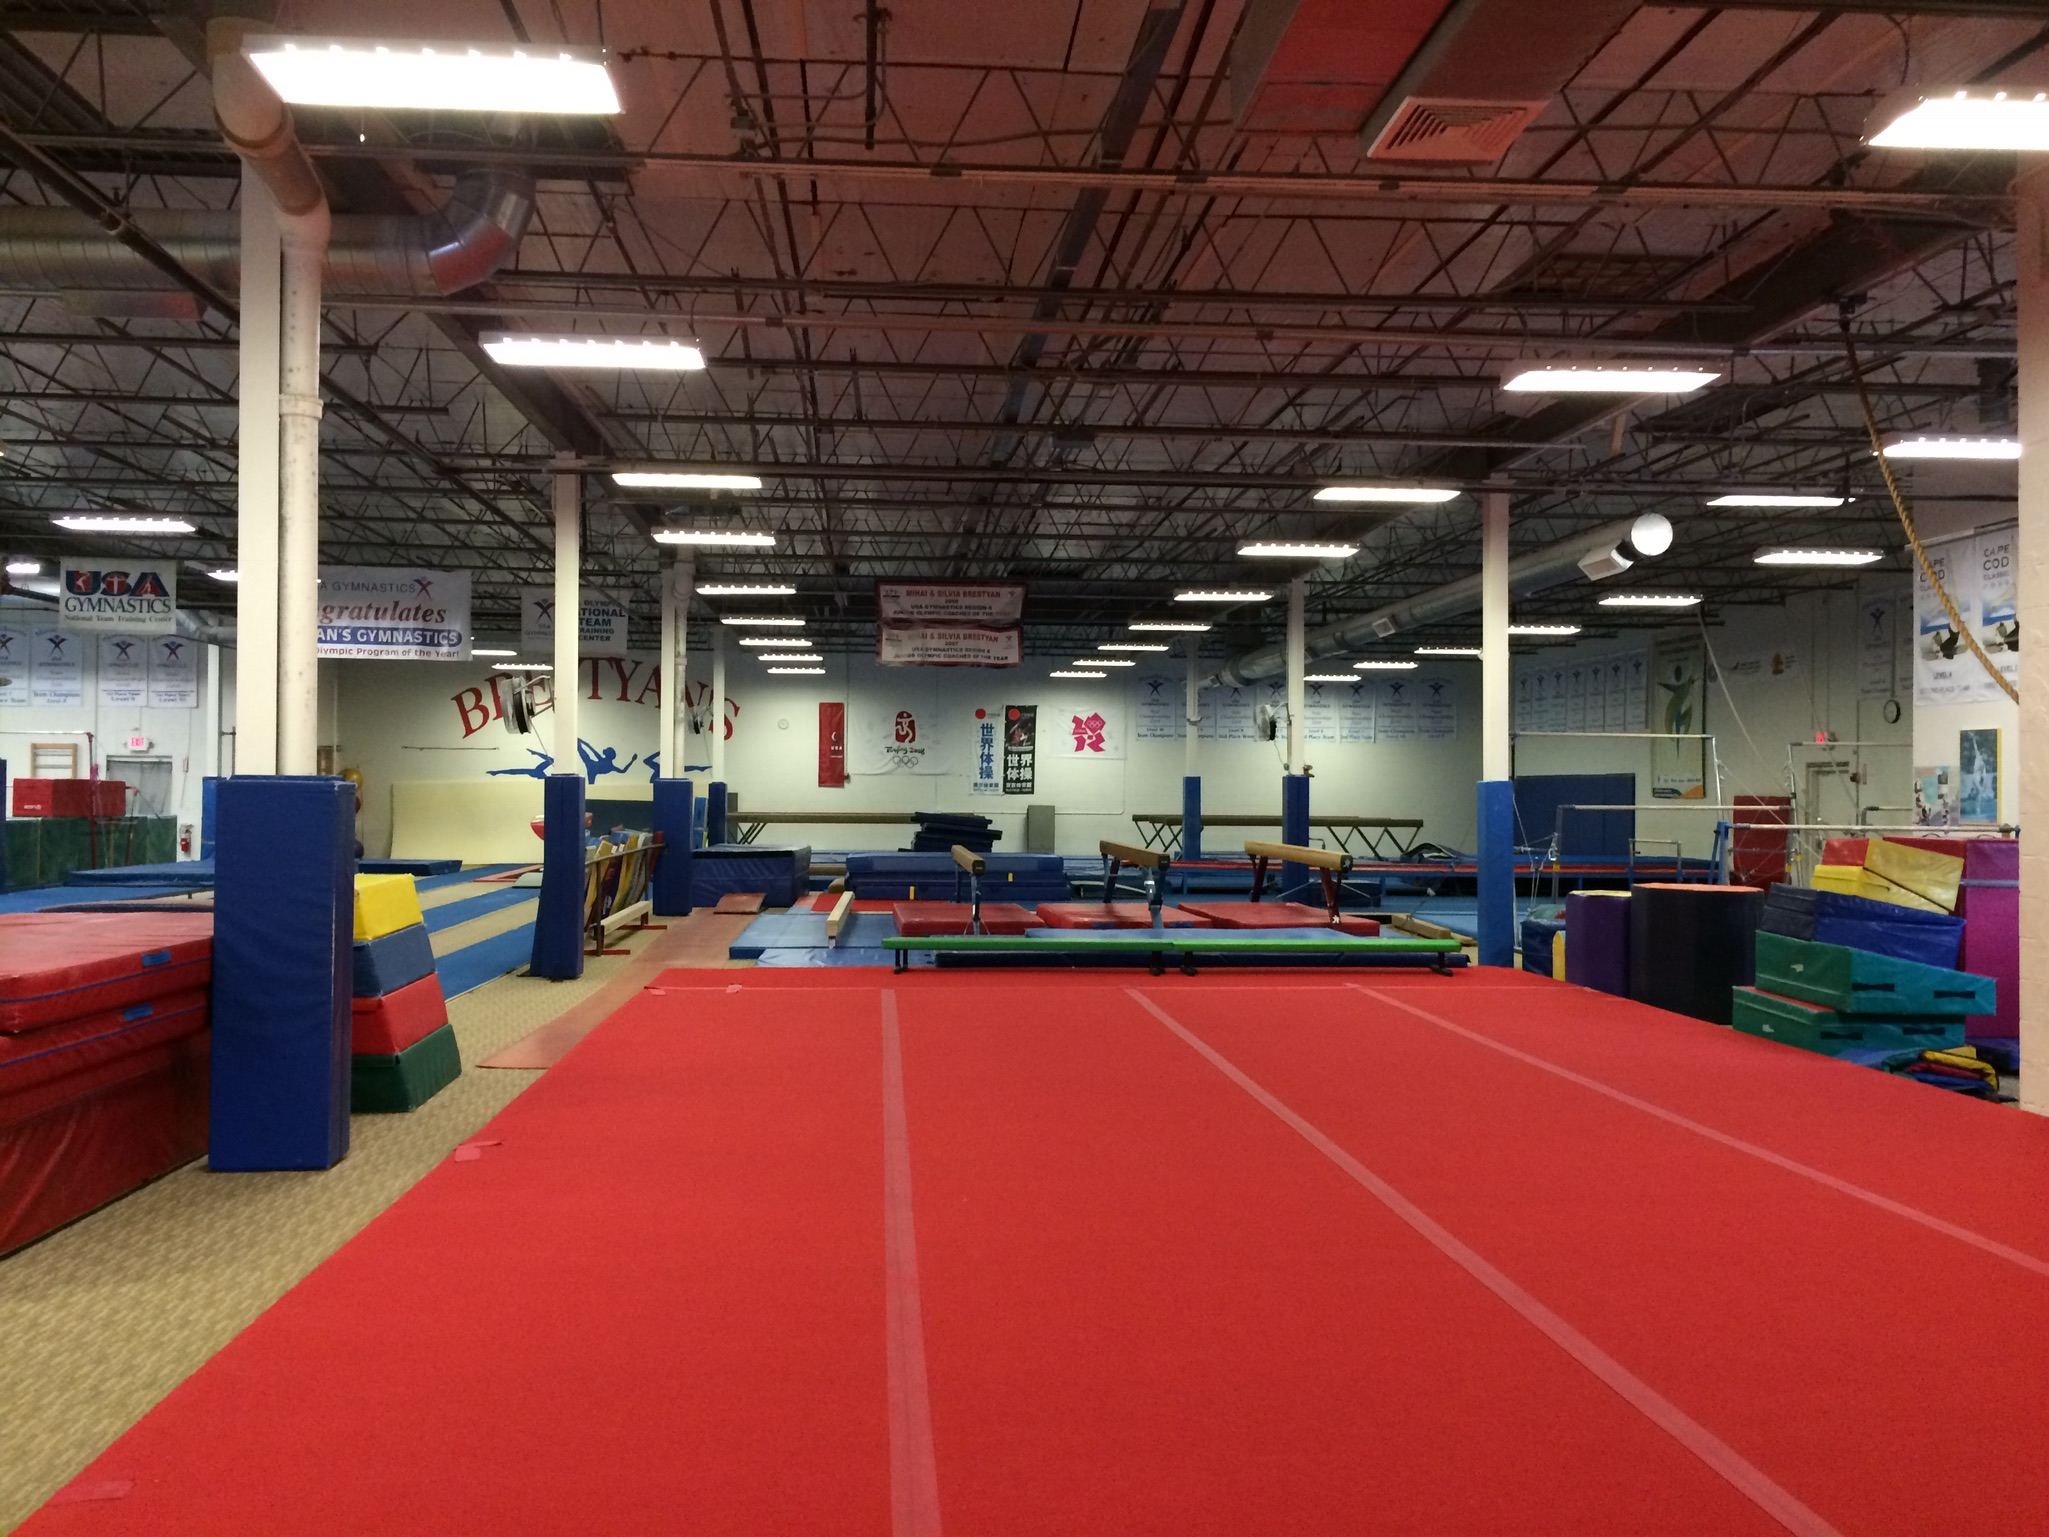 Brestyan's American Gymnastics Club